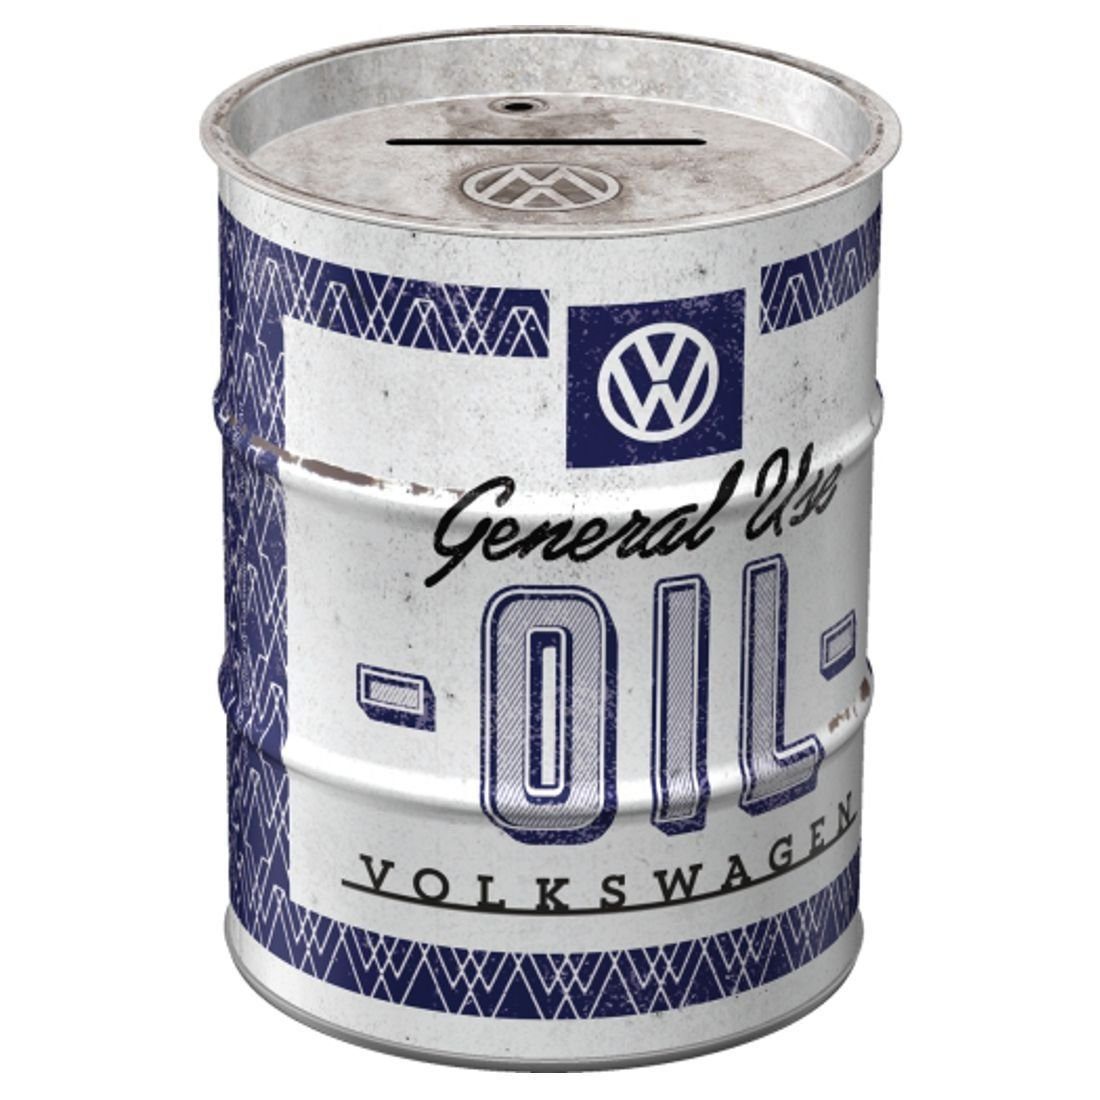 Nostalgic-Art Spardose Metall Spardose Sparschwein Piggy Bank - VW General  Use Oil